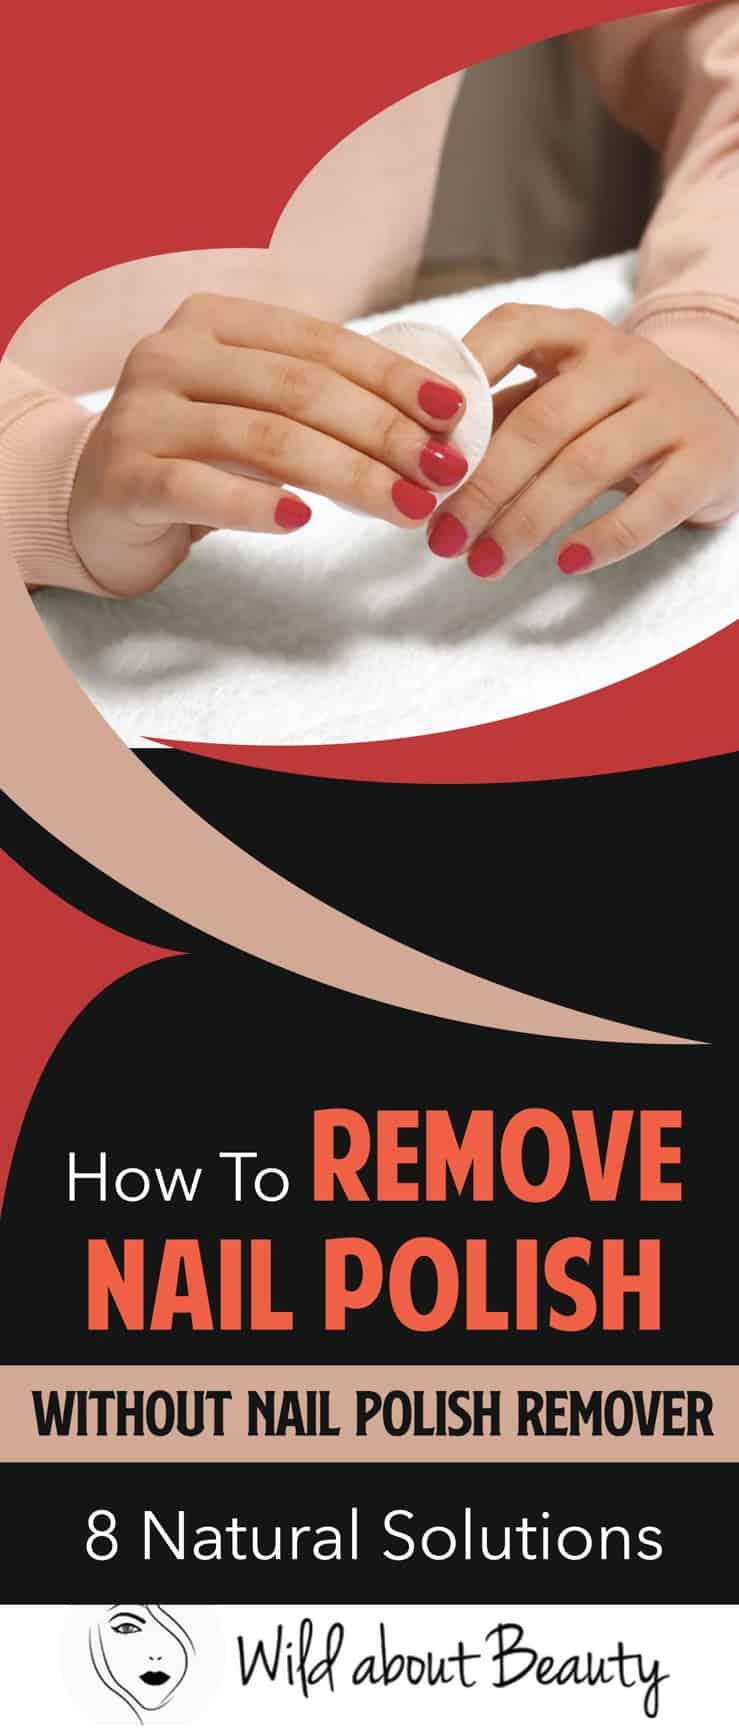 How To Remove Nail Polish